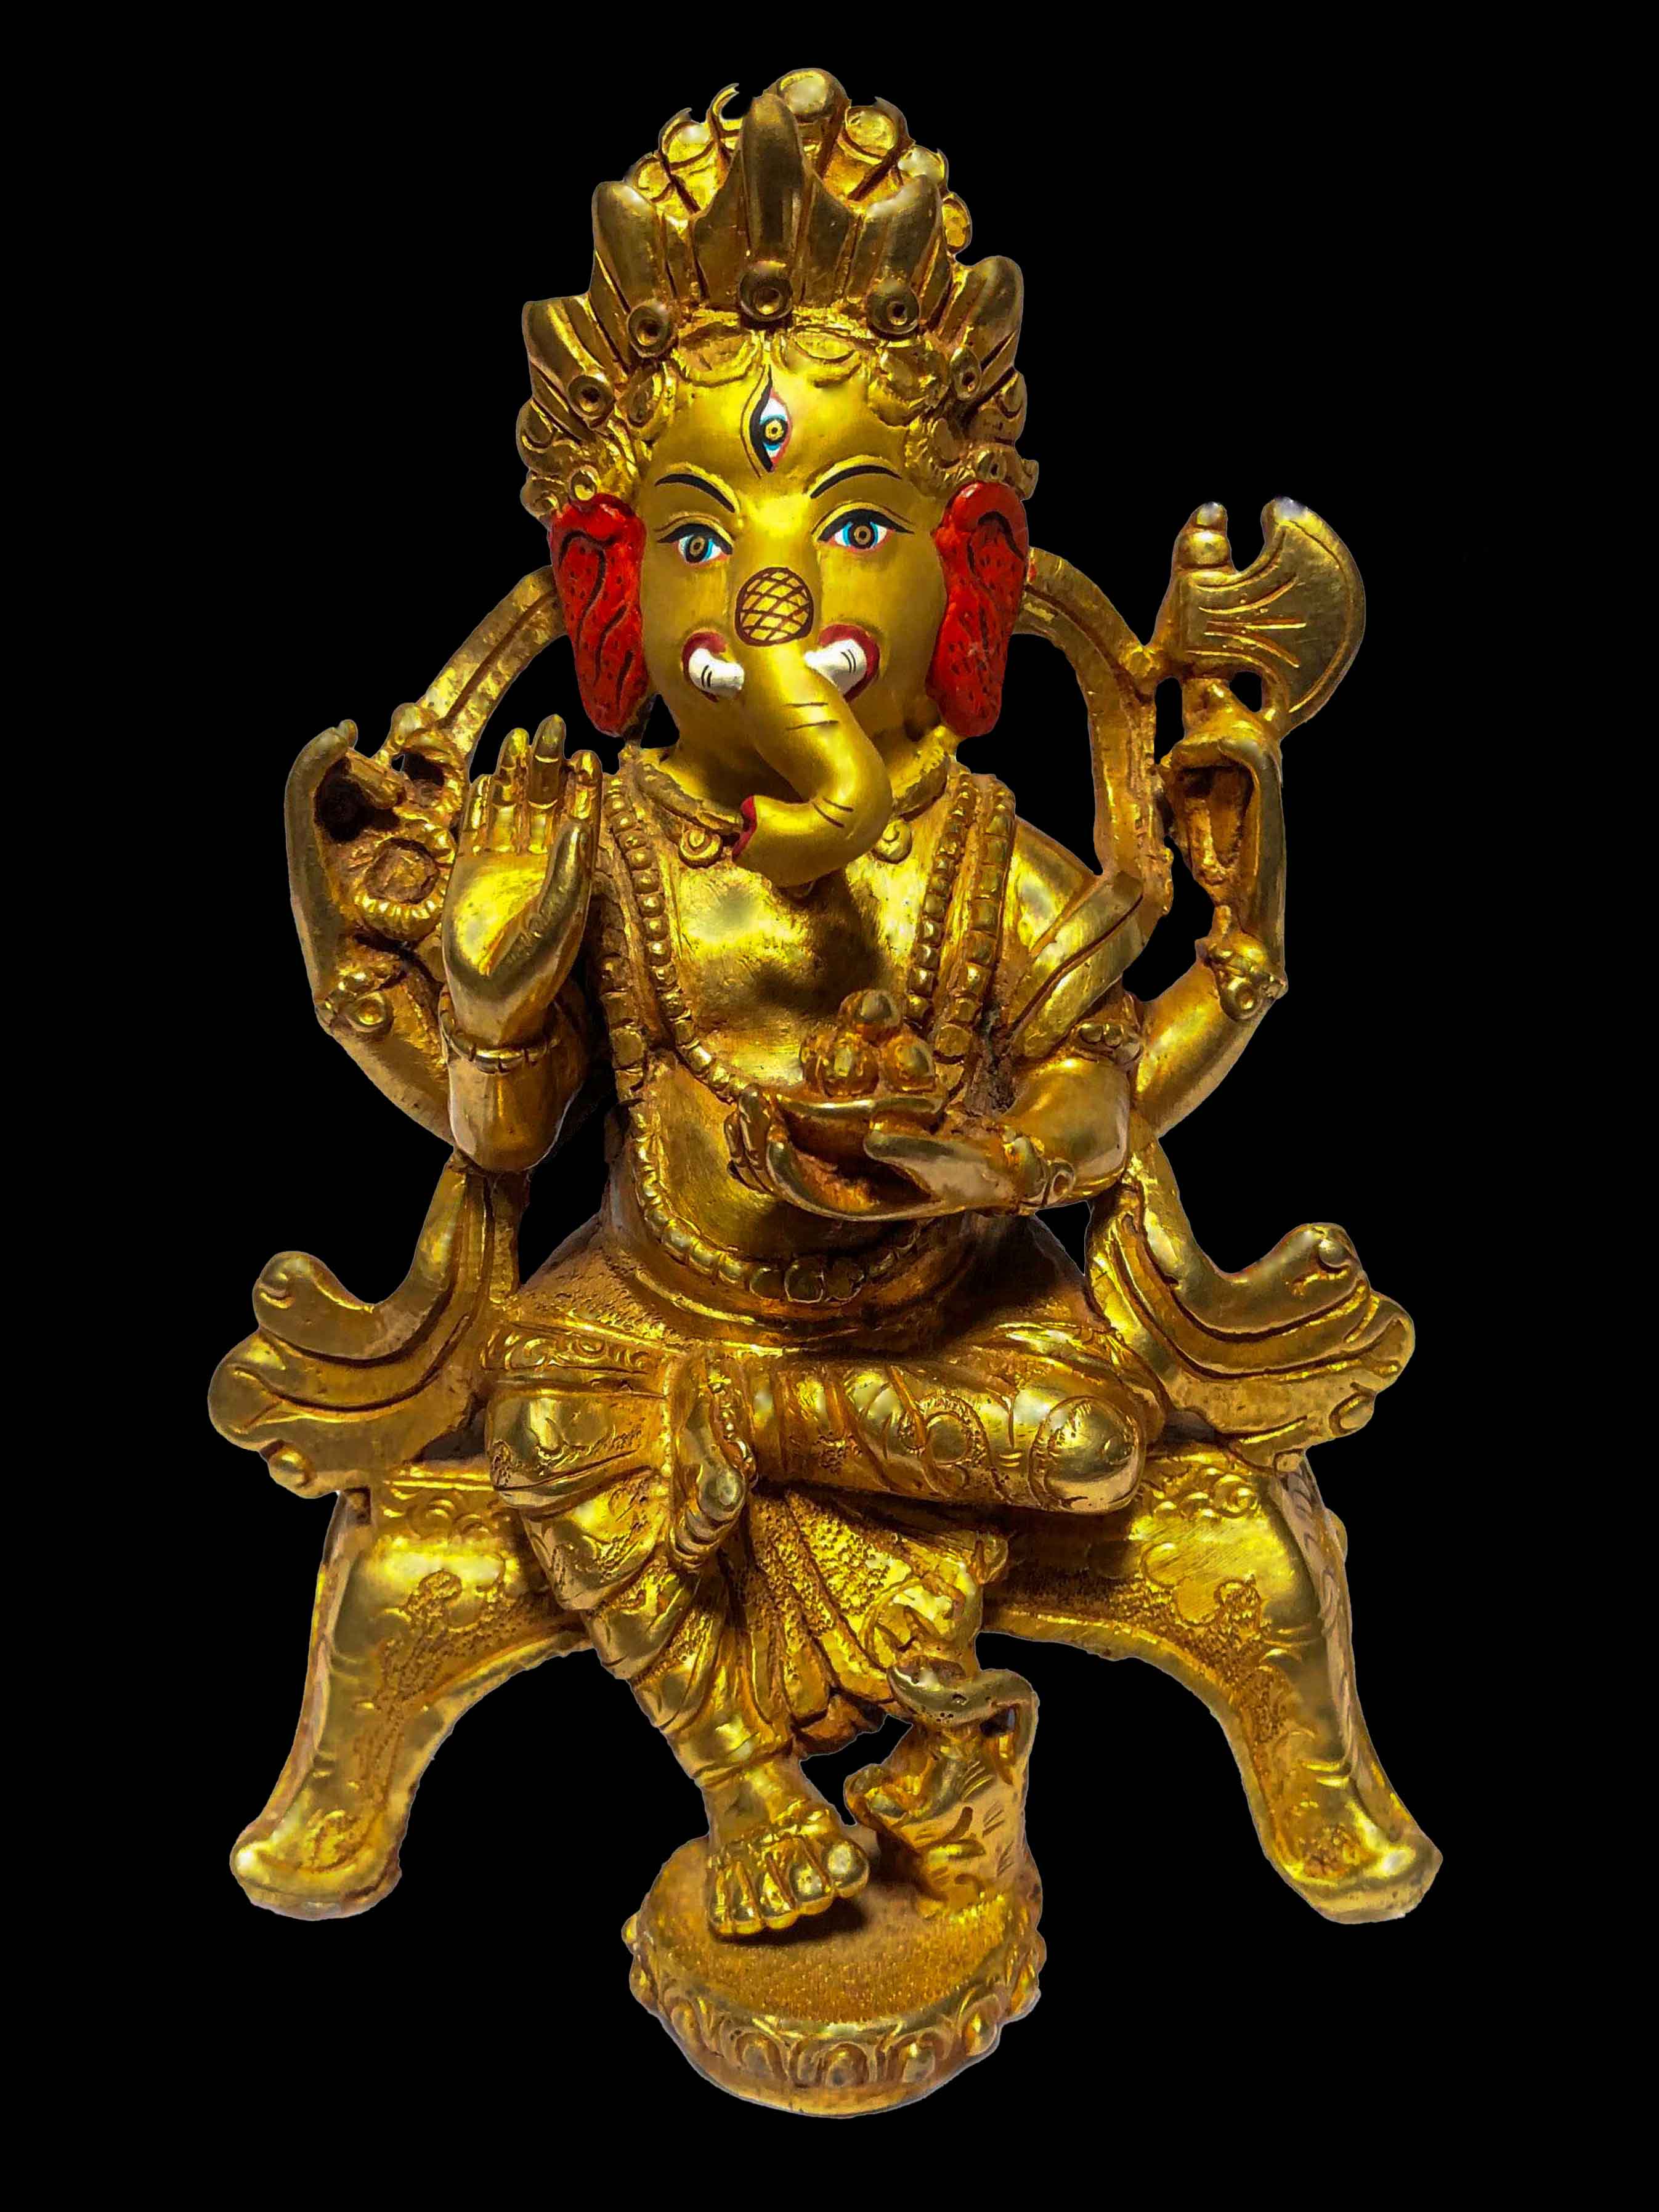 Tolle ALTE Miniatur BUDDHA-GANESHA Statue AMULETT aus NEPAL 